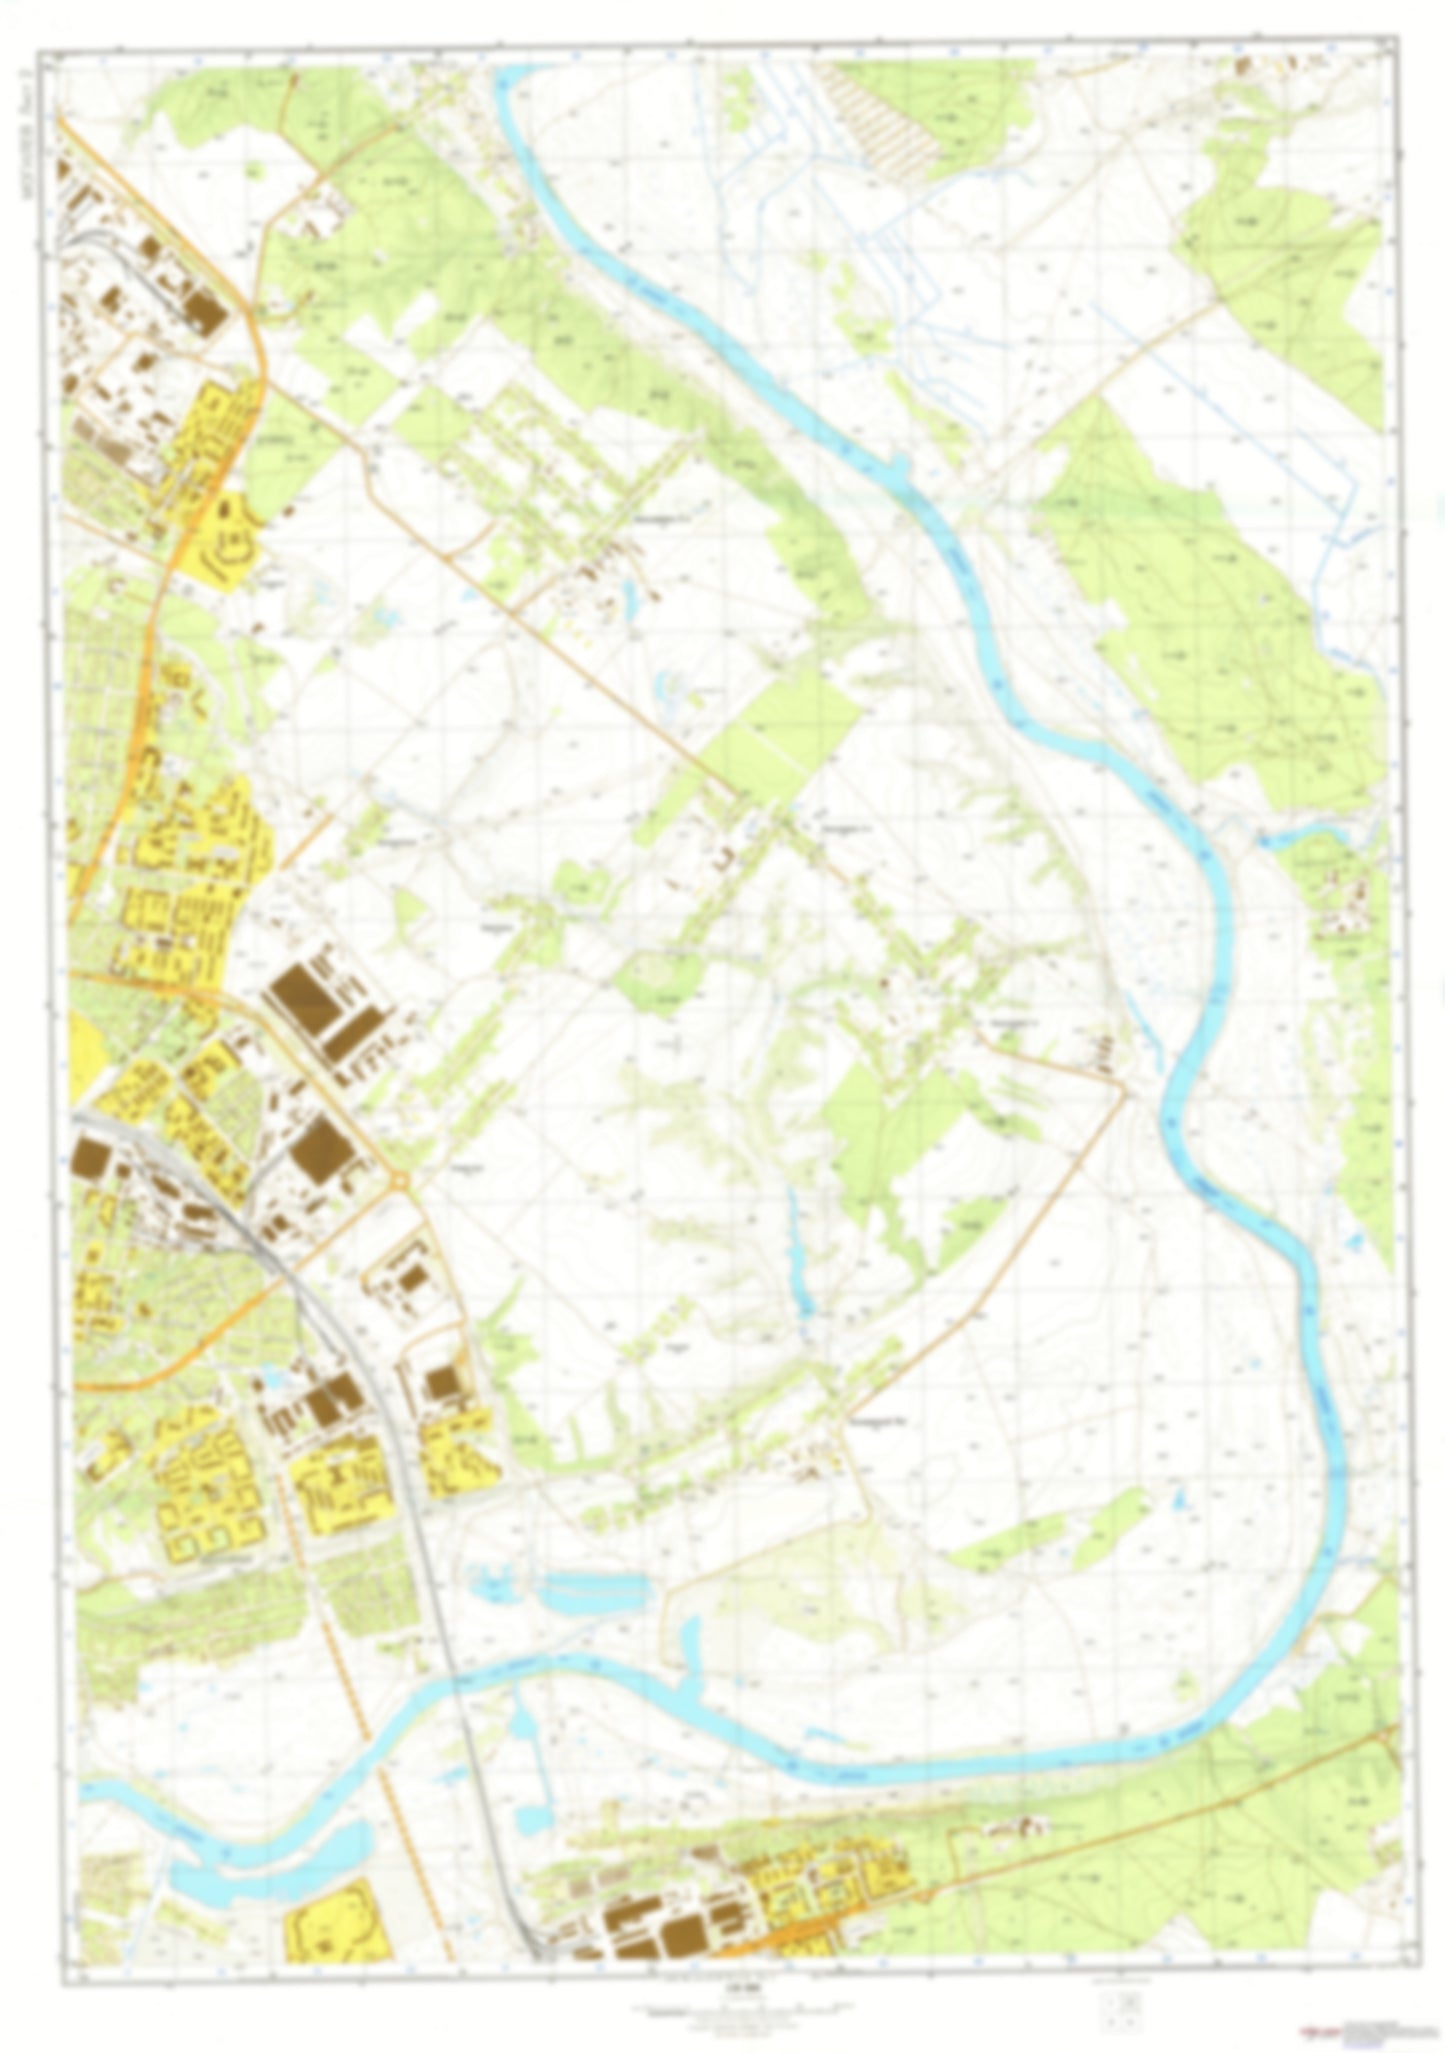 Mogilev 2  (Belarus)  - Soviet Military City Plans